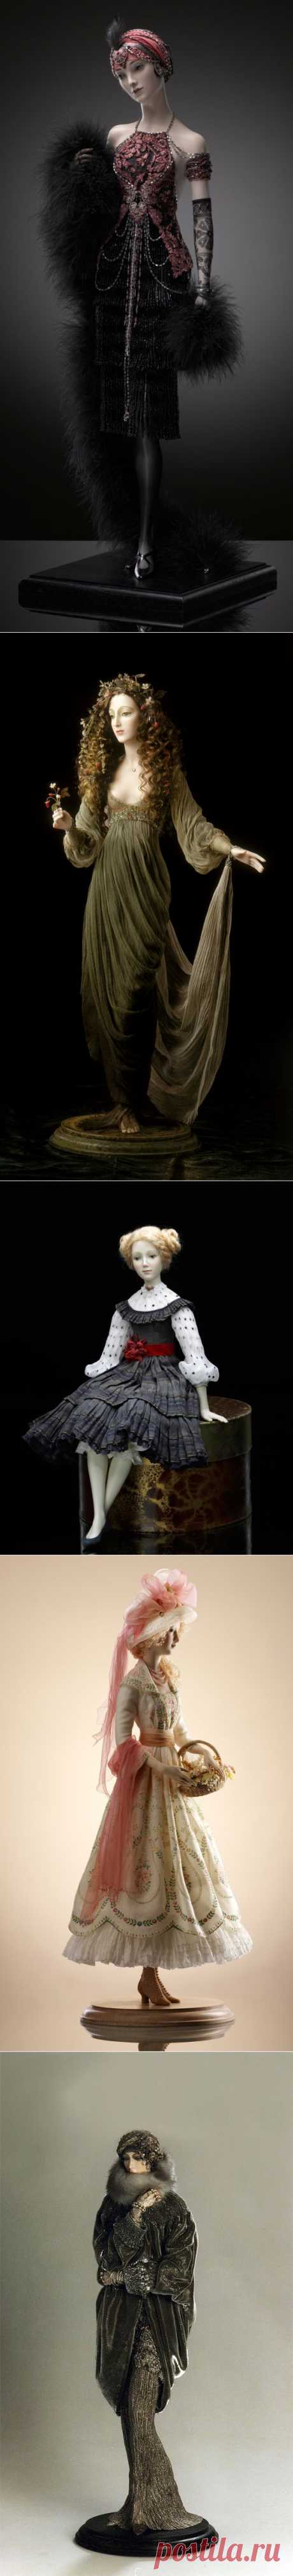 Кукла, как на пьедестале - букли, фижмы, рюши, бант.. Автор кукол - Александра Кукинова.